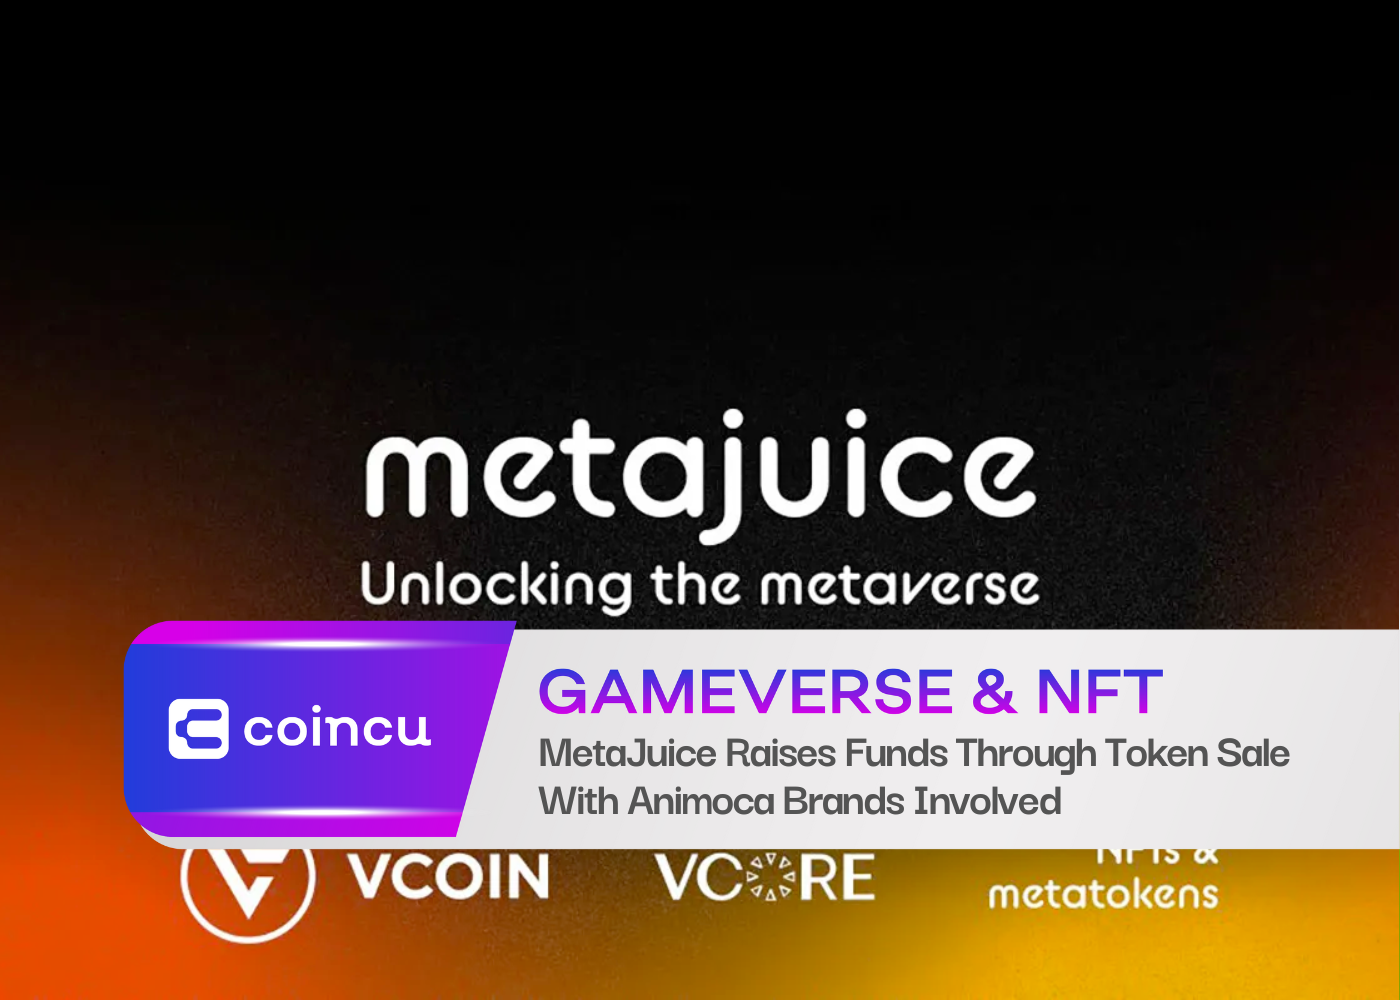 MetaJuice Raises Funds Through Token Sale With Animoca Brands Involved